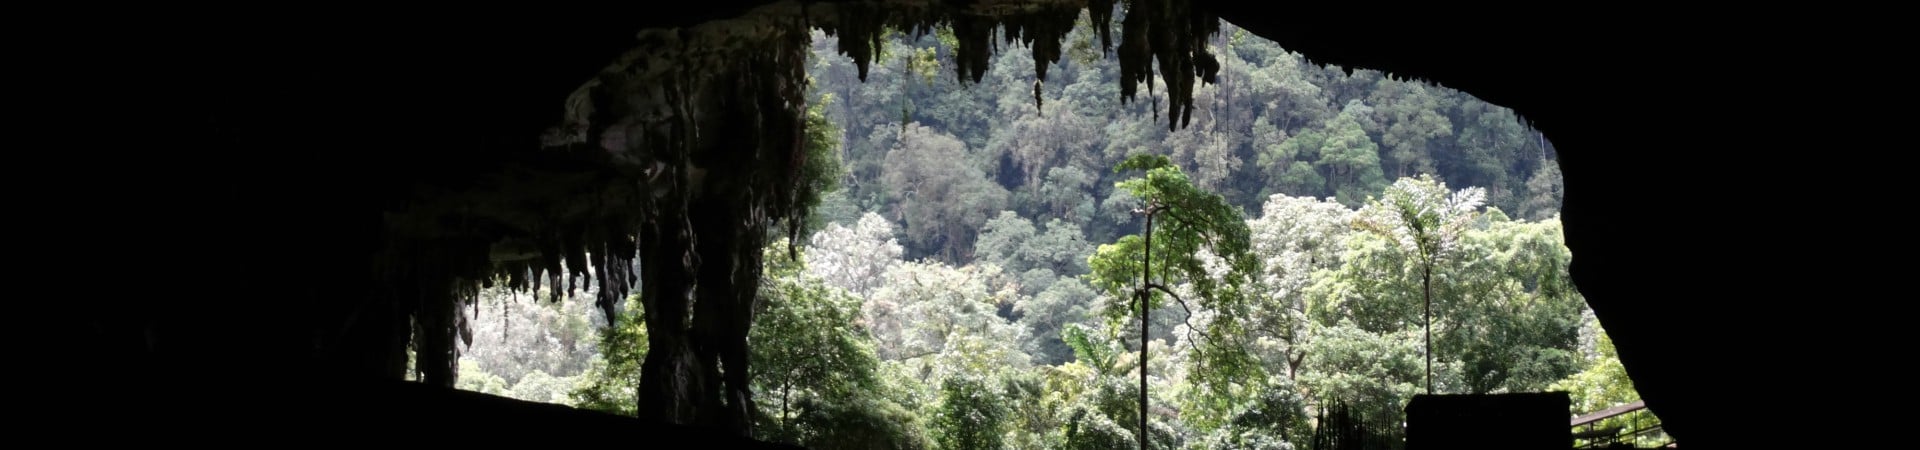 Image of Hidden Beauty Of Niah Caves